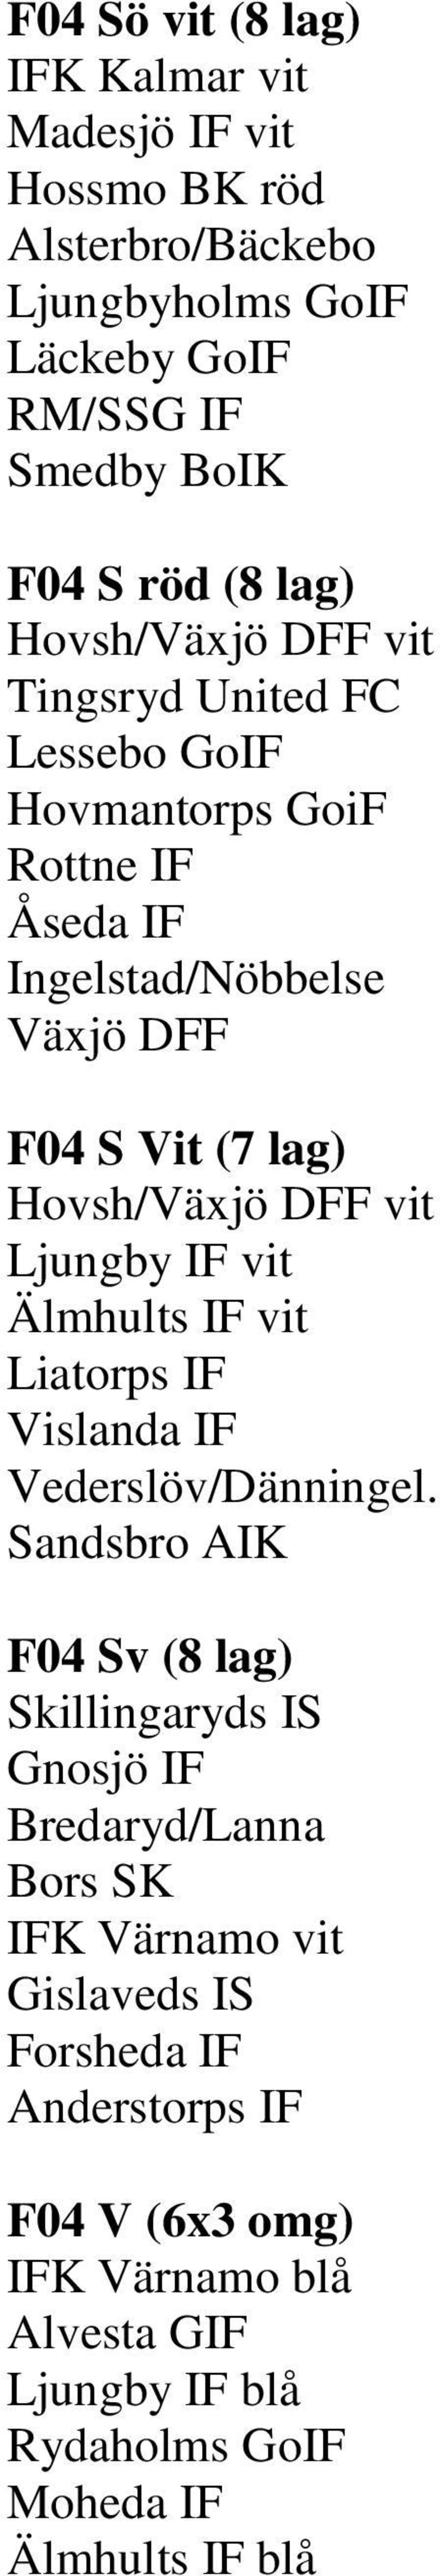 (7 lag) Hovsh/Växjö DFF vit Ljungby IF vit Älmhults IF vit Liatorps IF Vislanda IF Vederslöv/Dänningel.